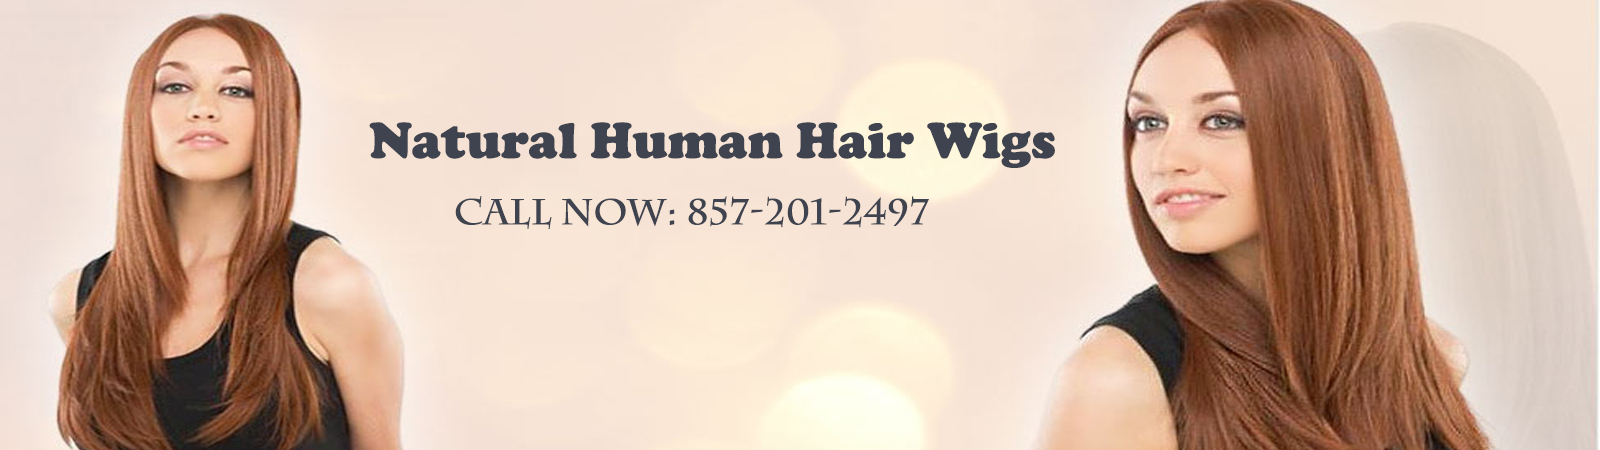 natural human hair wigs shop